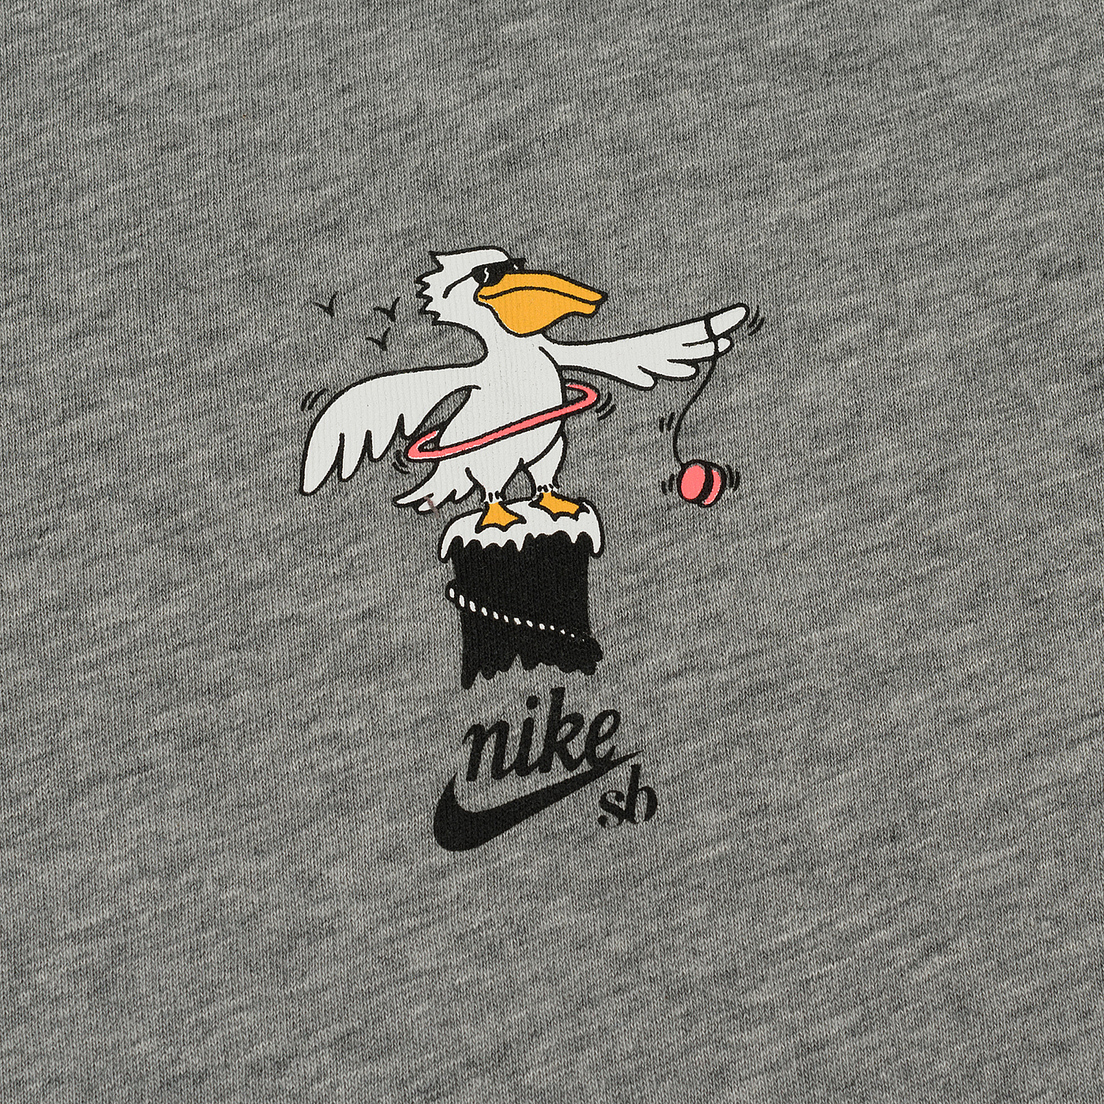 Nike SB Мужская футболка Pelican